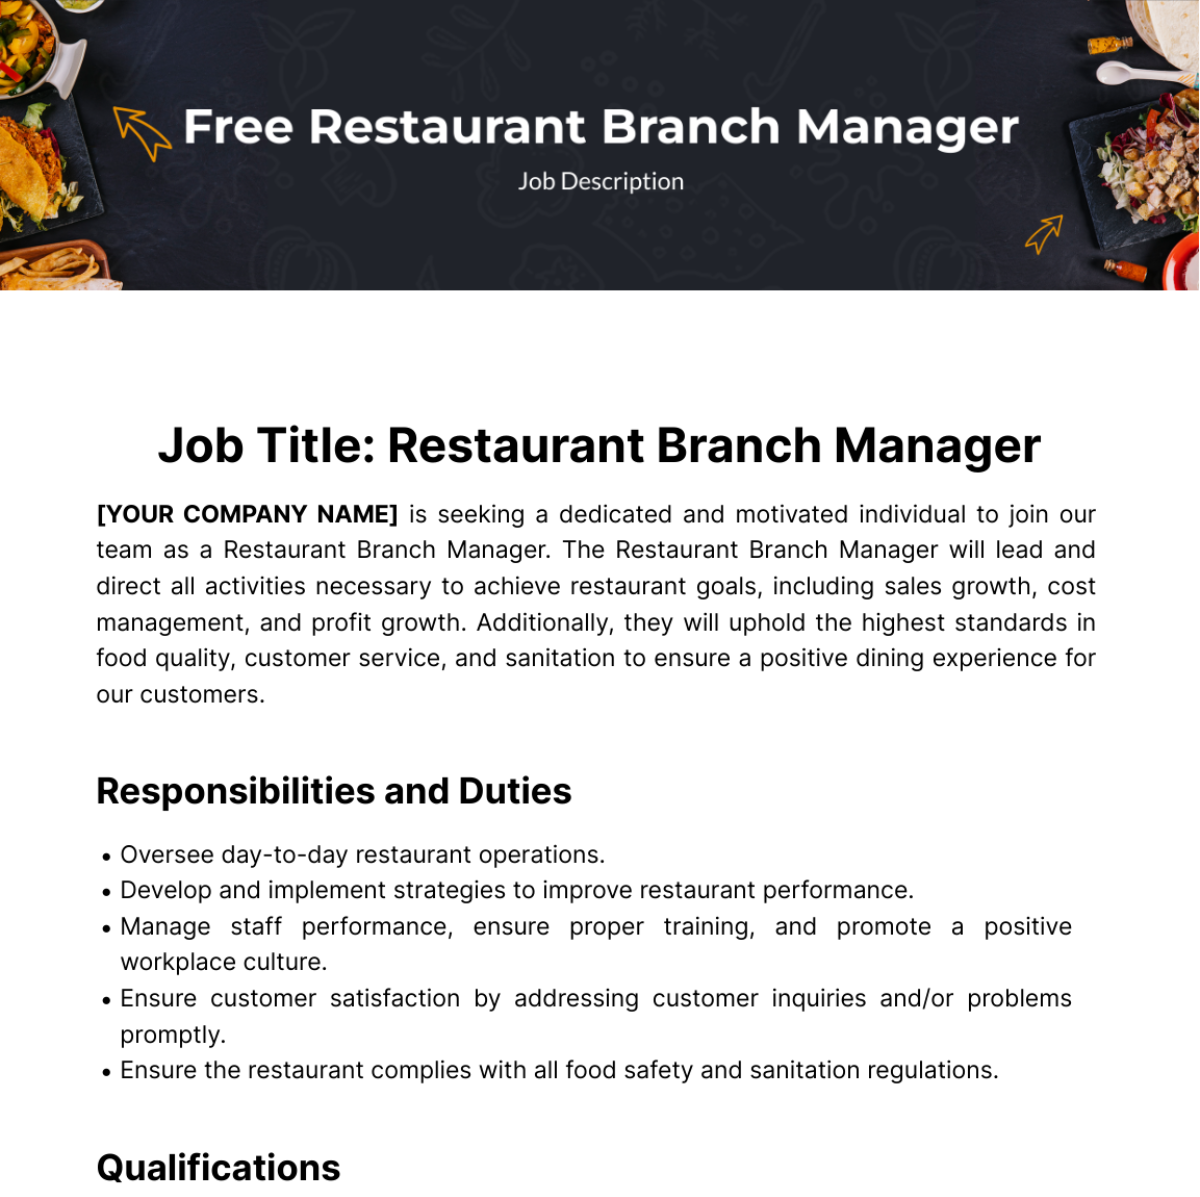 Free Restaurant Branch Manager Job Description Template